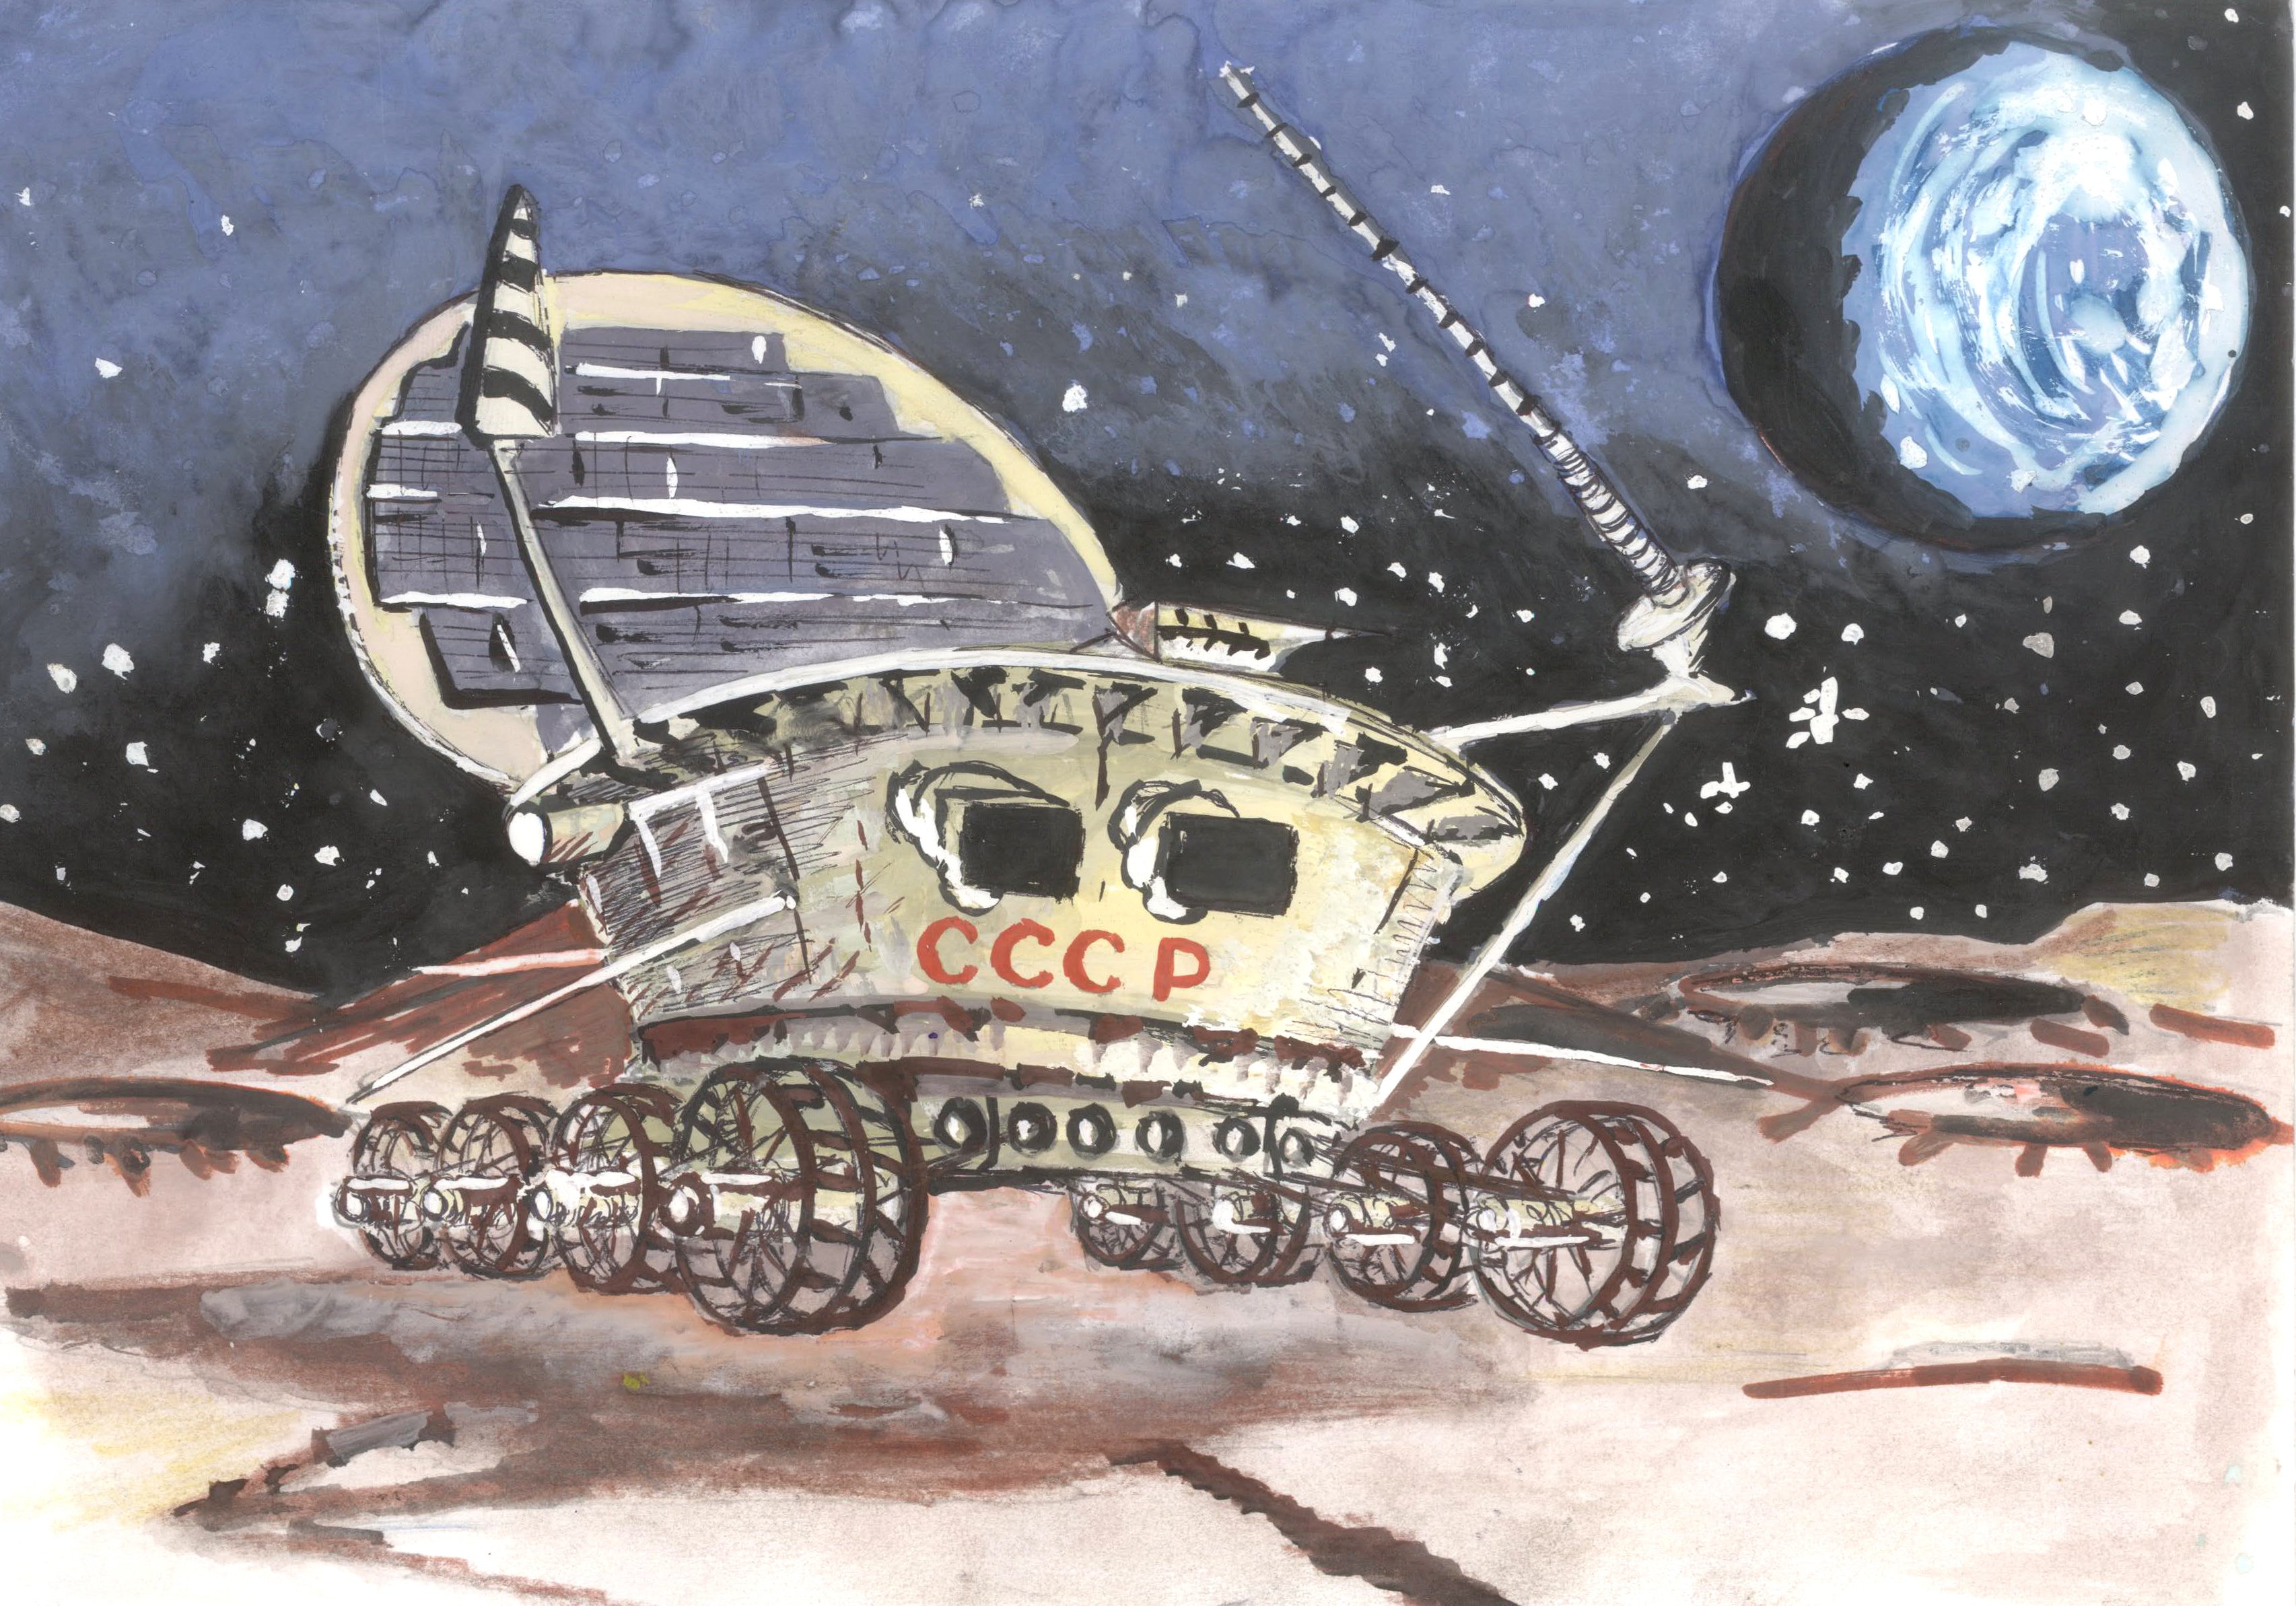 Советские песни о космосе